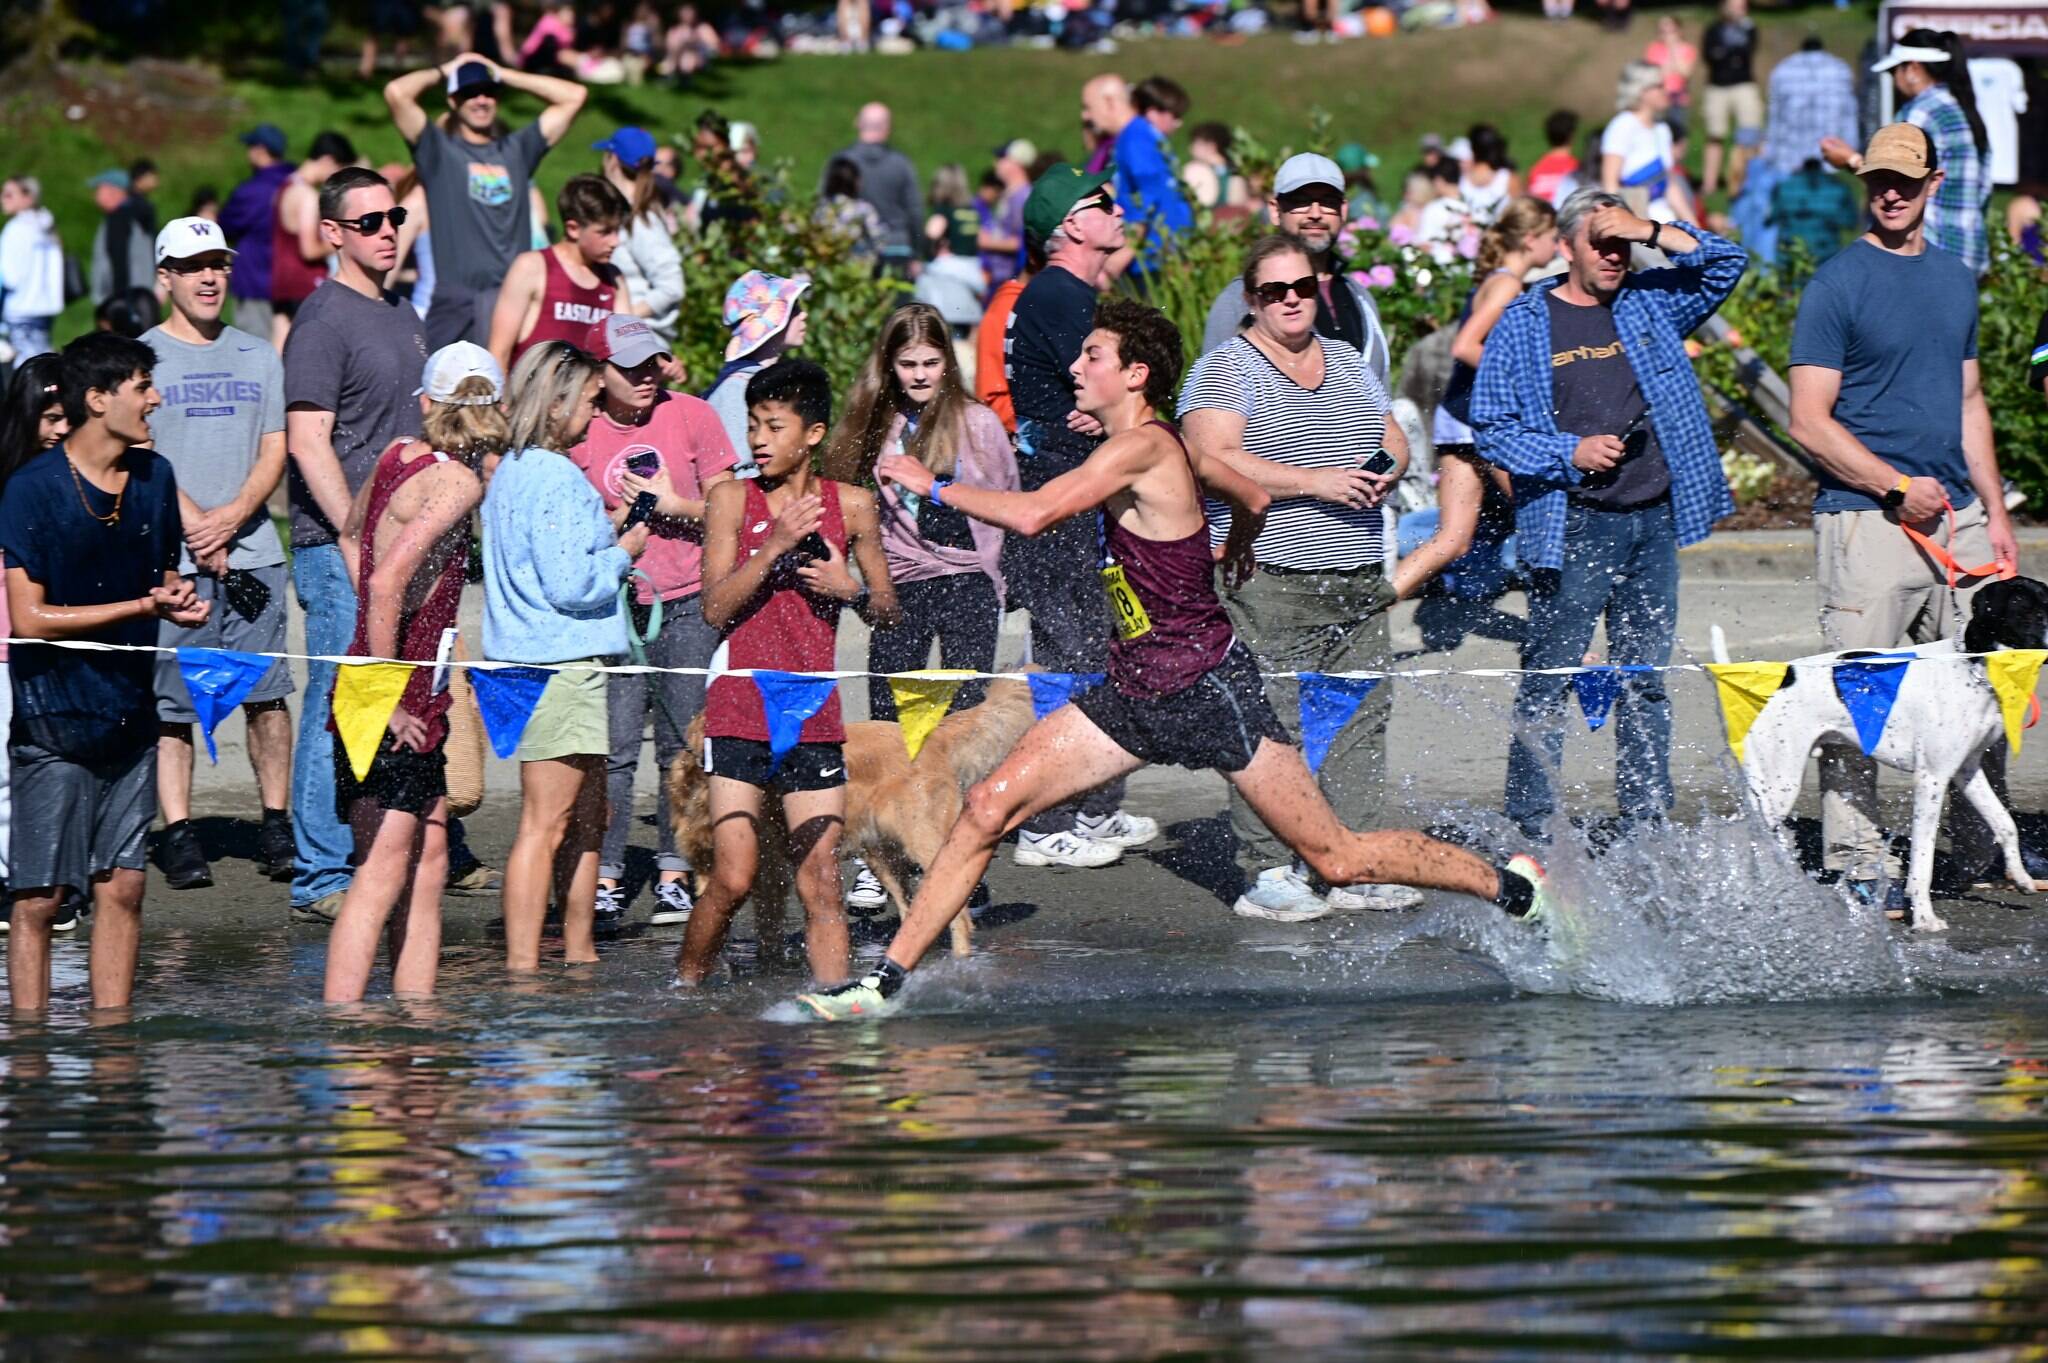 Owen Powell kicks up a splash while running through the lake. Photo courtesy of Aaron Koopman